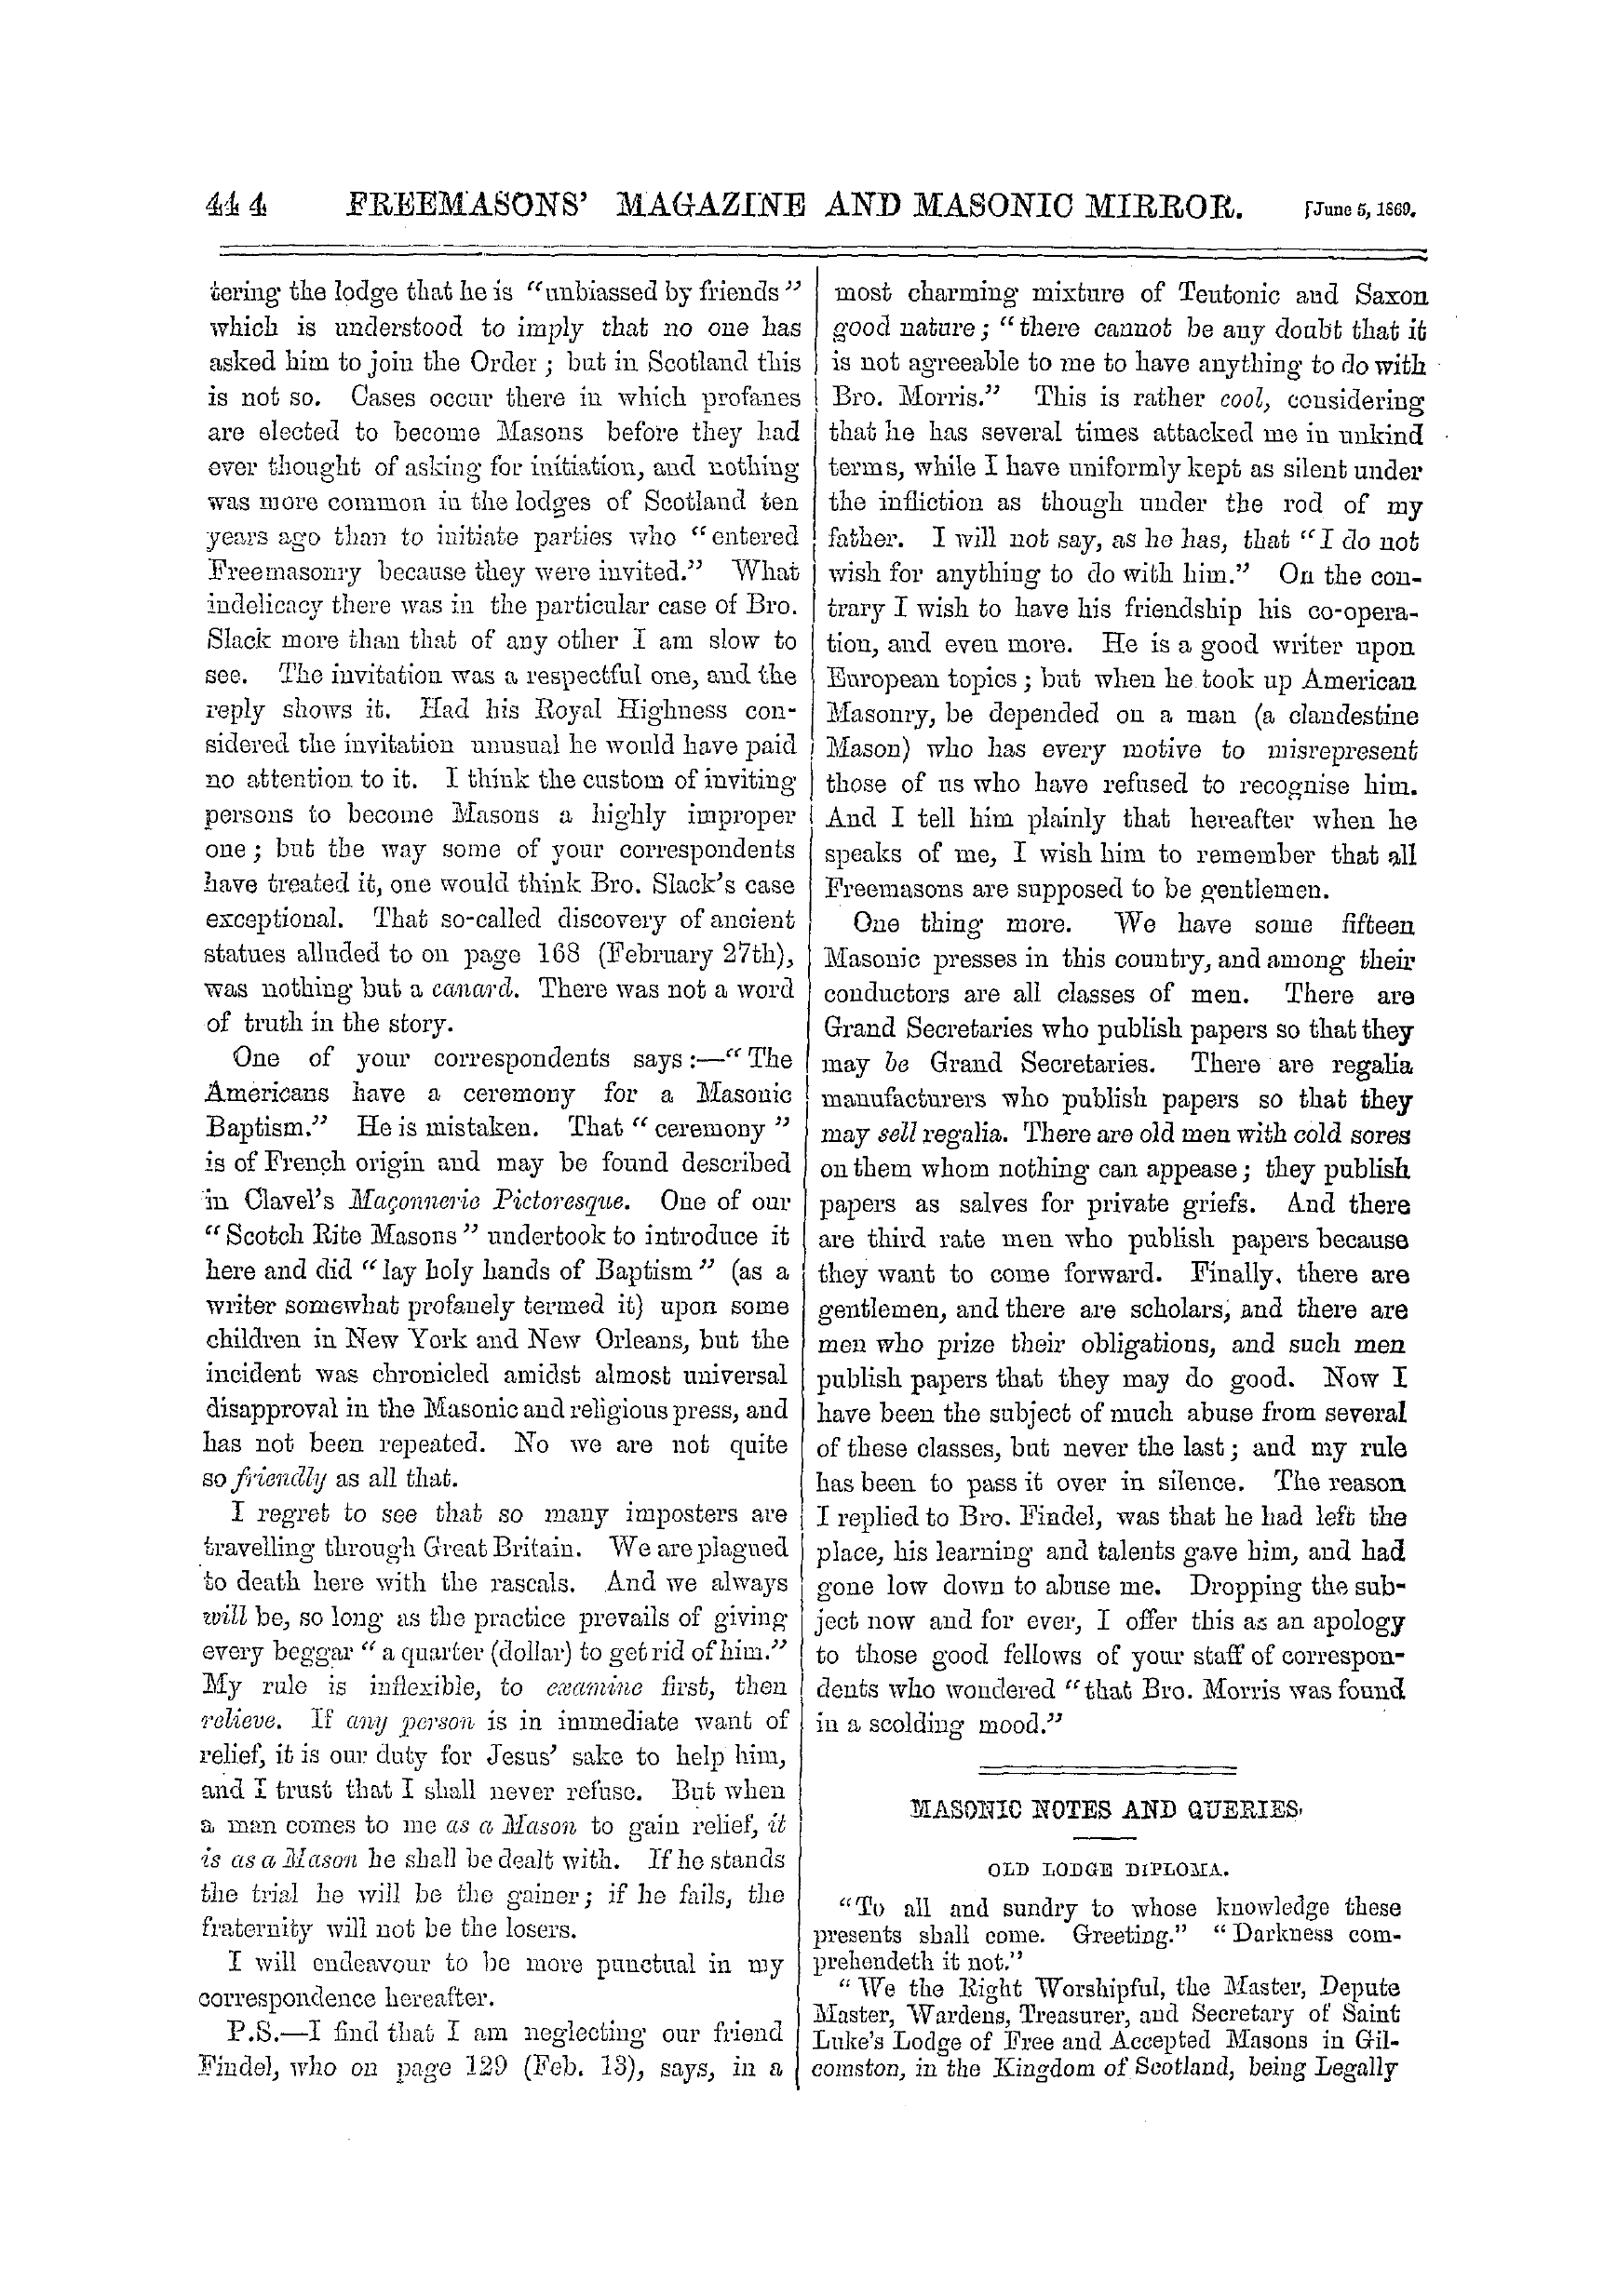 The Freemasons' Monthly Magazine: 1869-06-05 - American Correspondence.